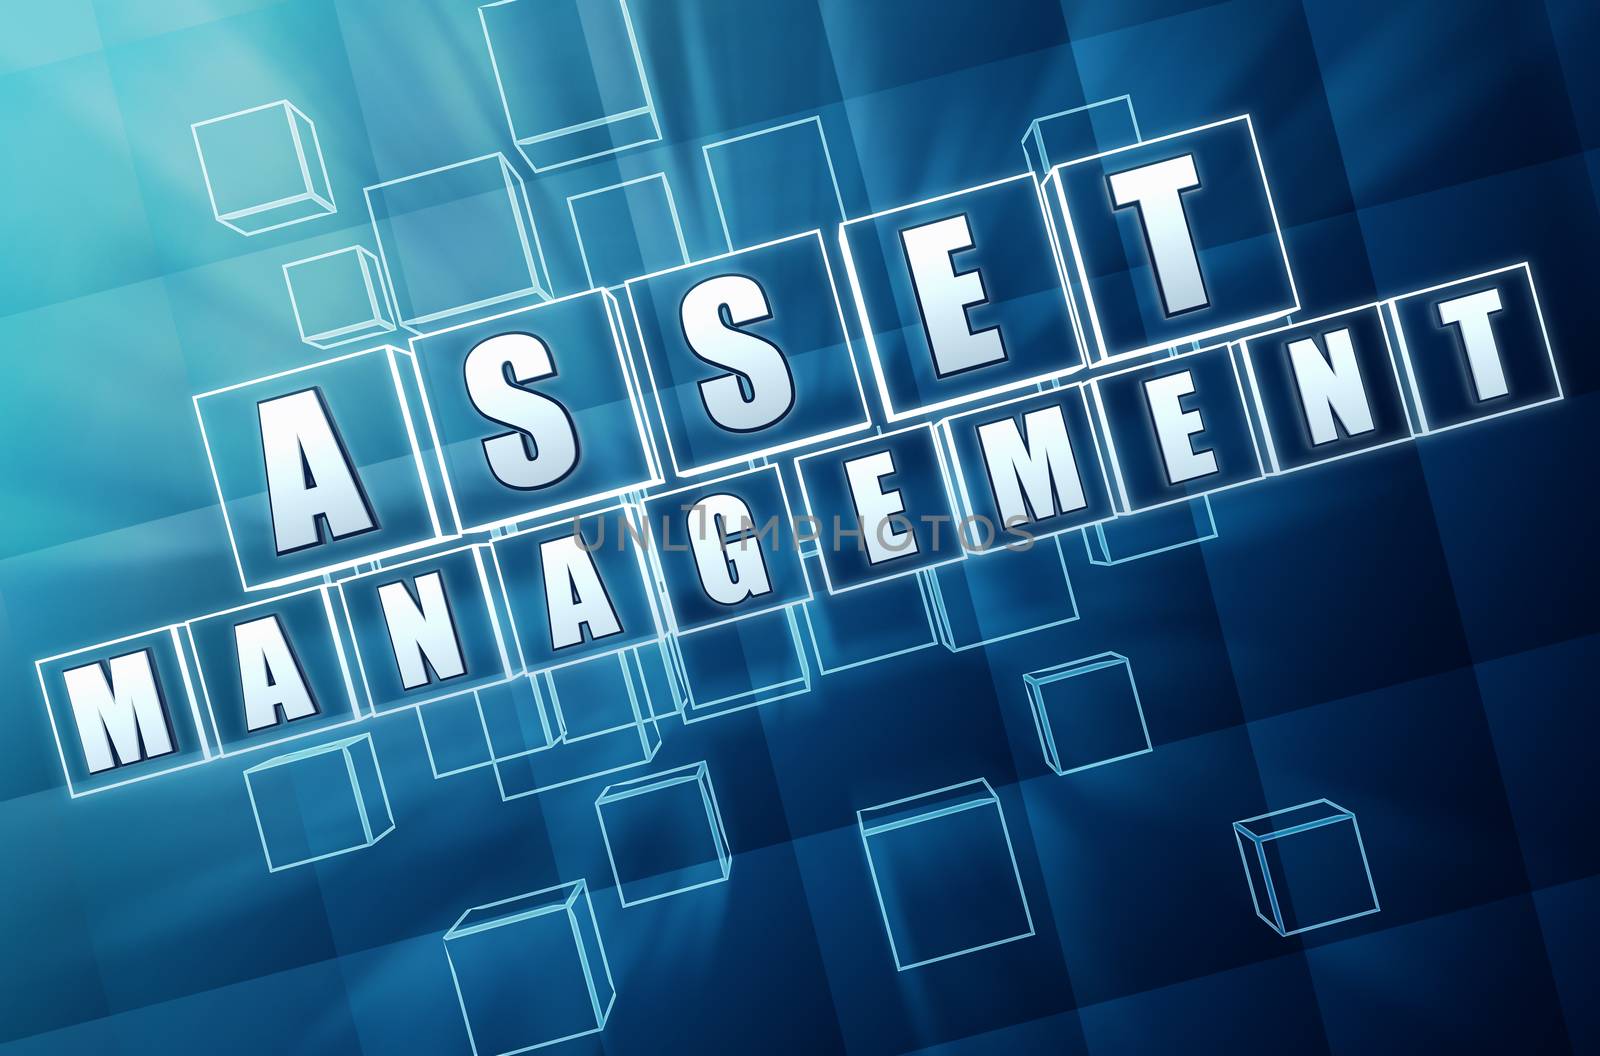 asset management in blue glass blocks by marinini